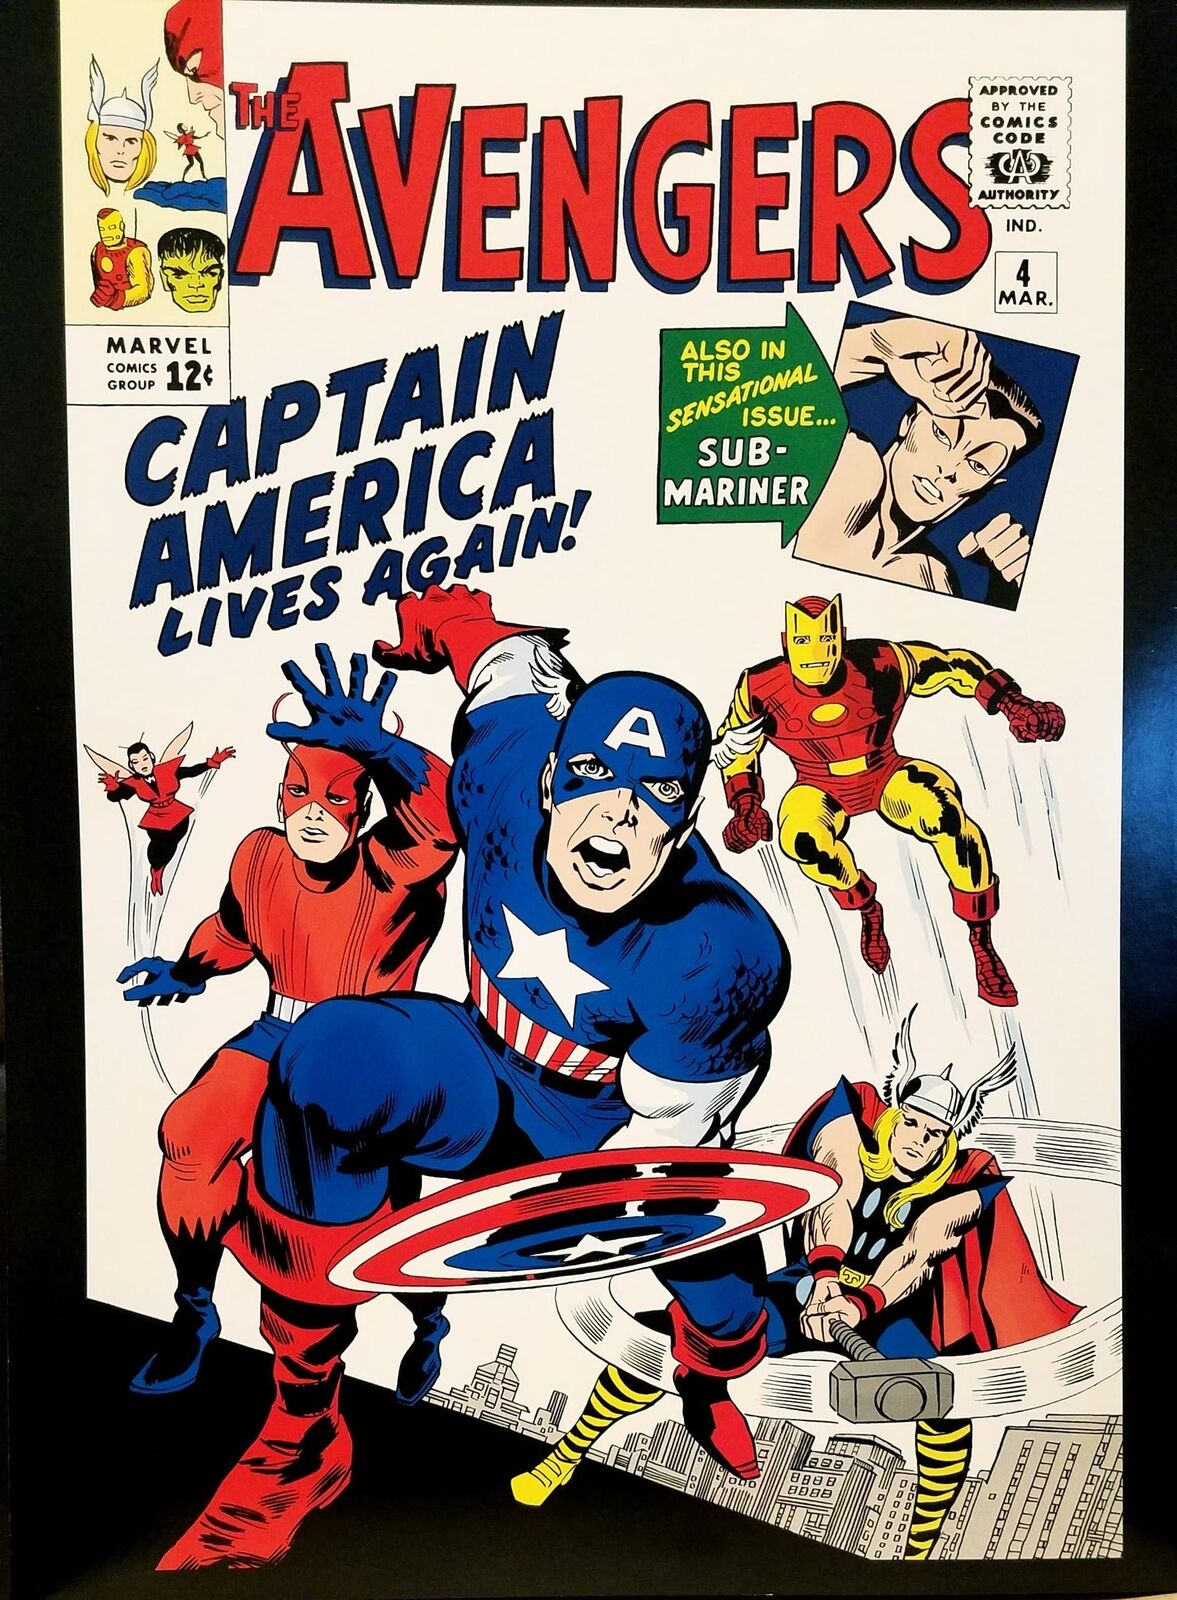 Avengers #4 Captain America 12x16 FRAMED Art Poster Print by Jack Kirby, 1964 Ma